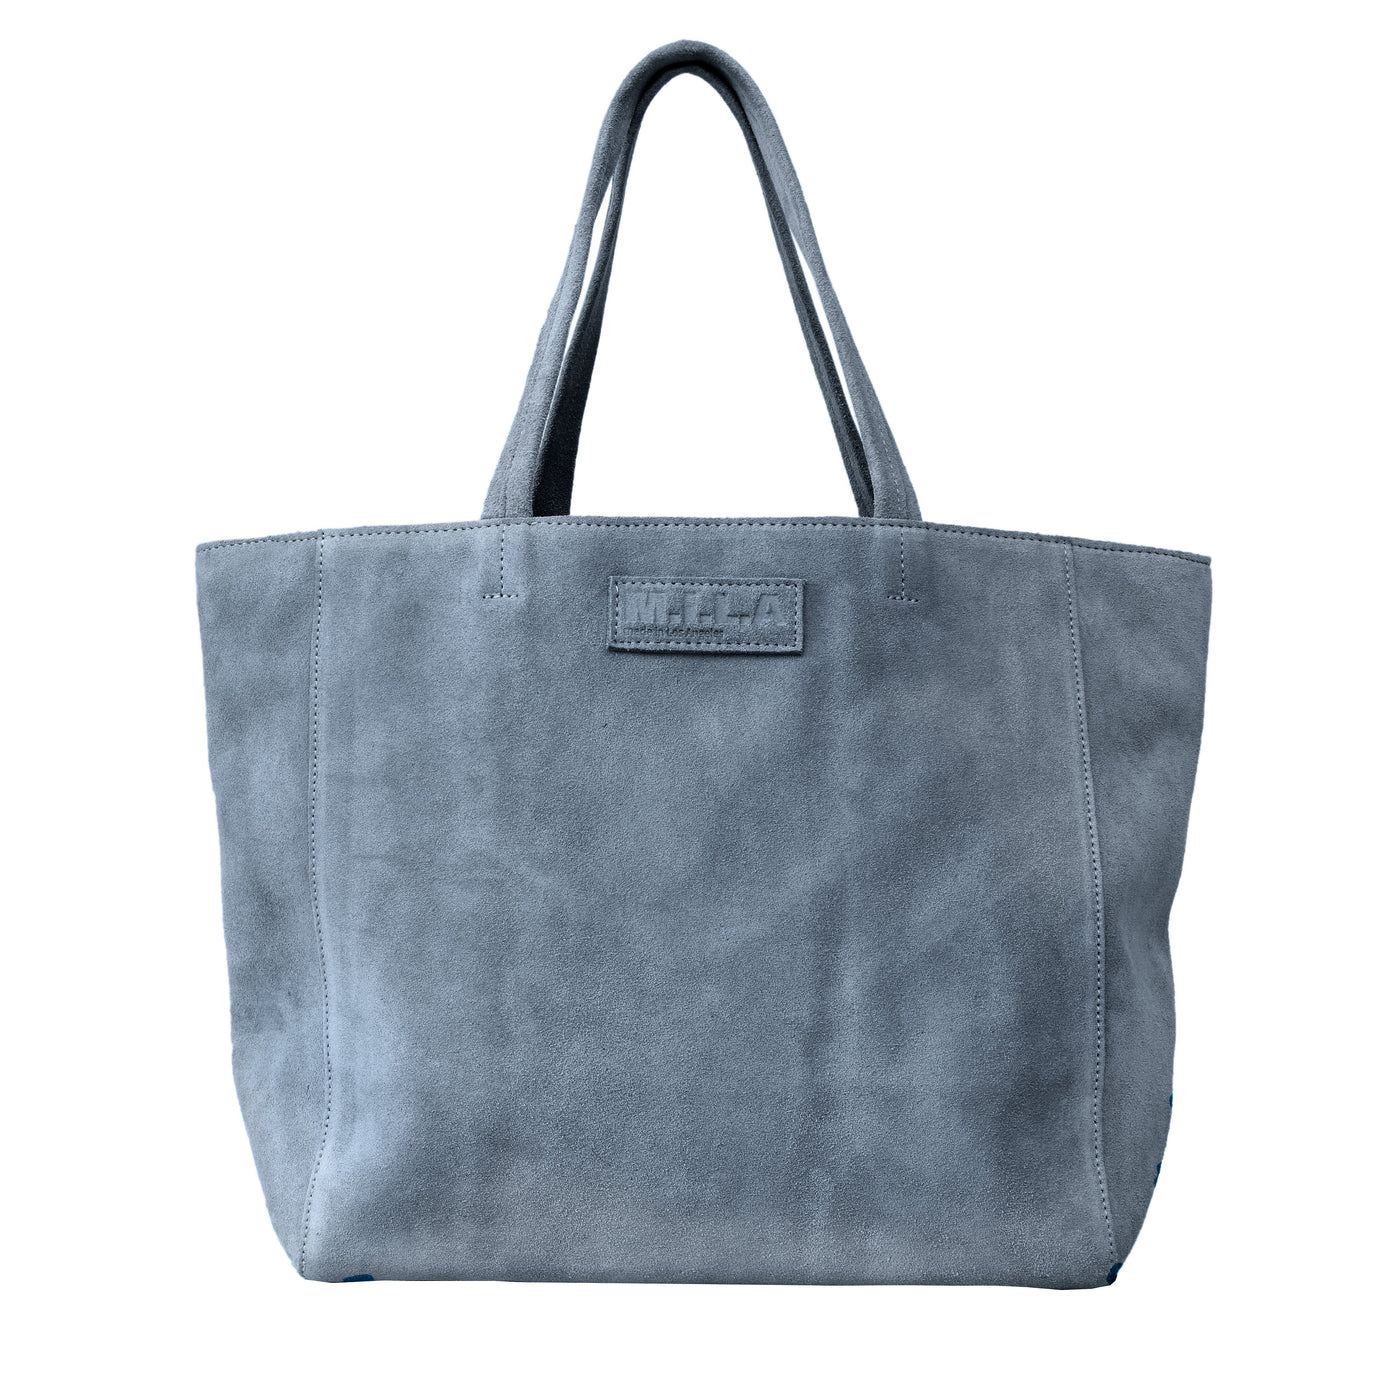 Tote Bag - Buy Blue Denim Tote Bag Online